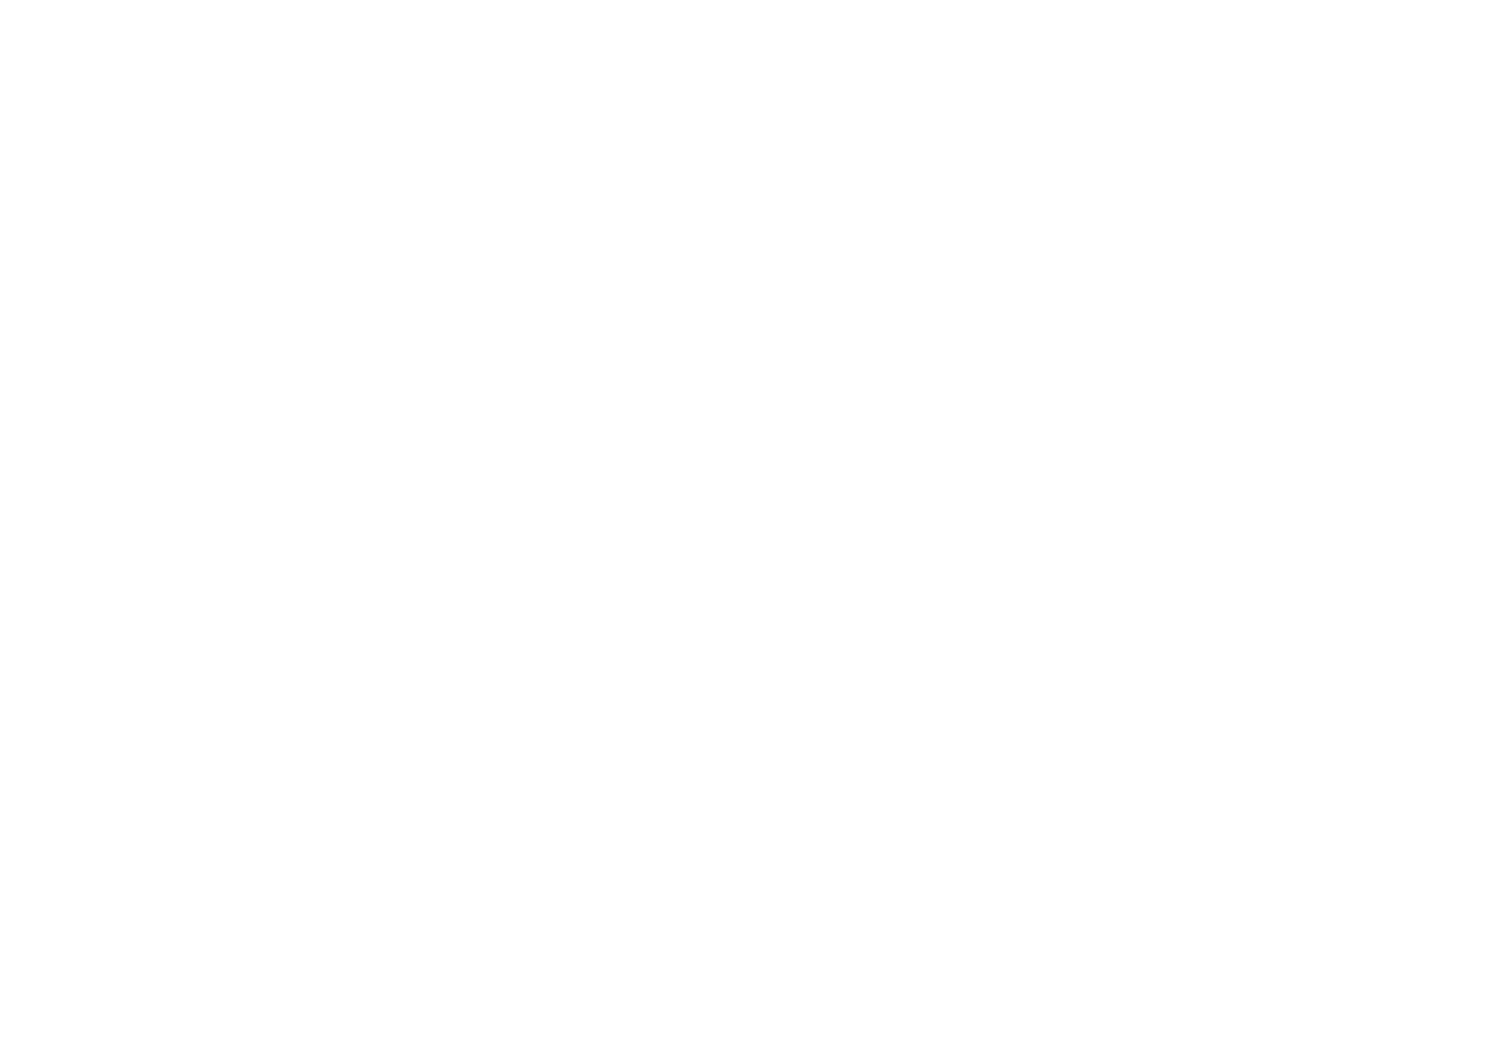 Pedro Ramos Brinca